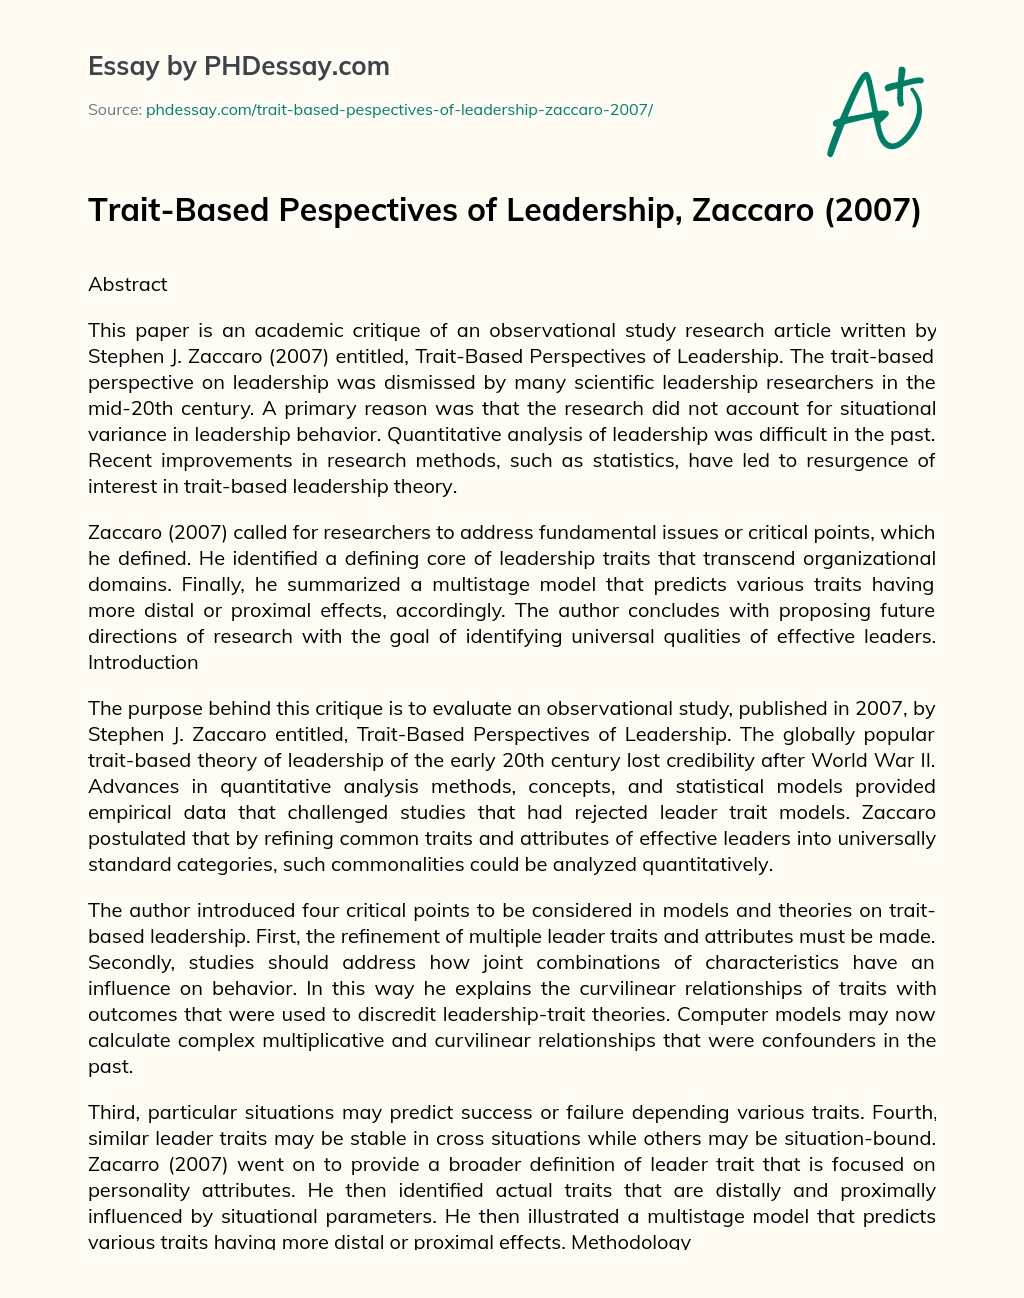 Trait-Based Pespectives of Leadership, Zaccaro (2007) essay